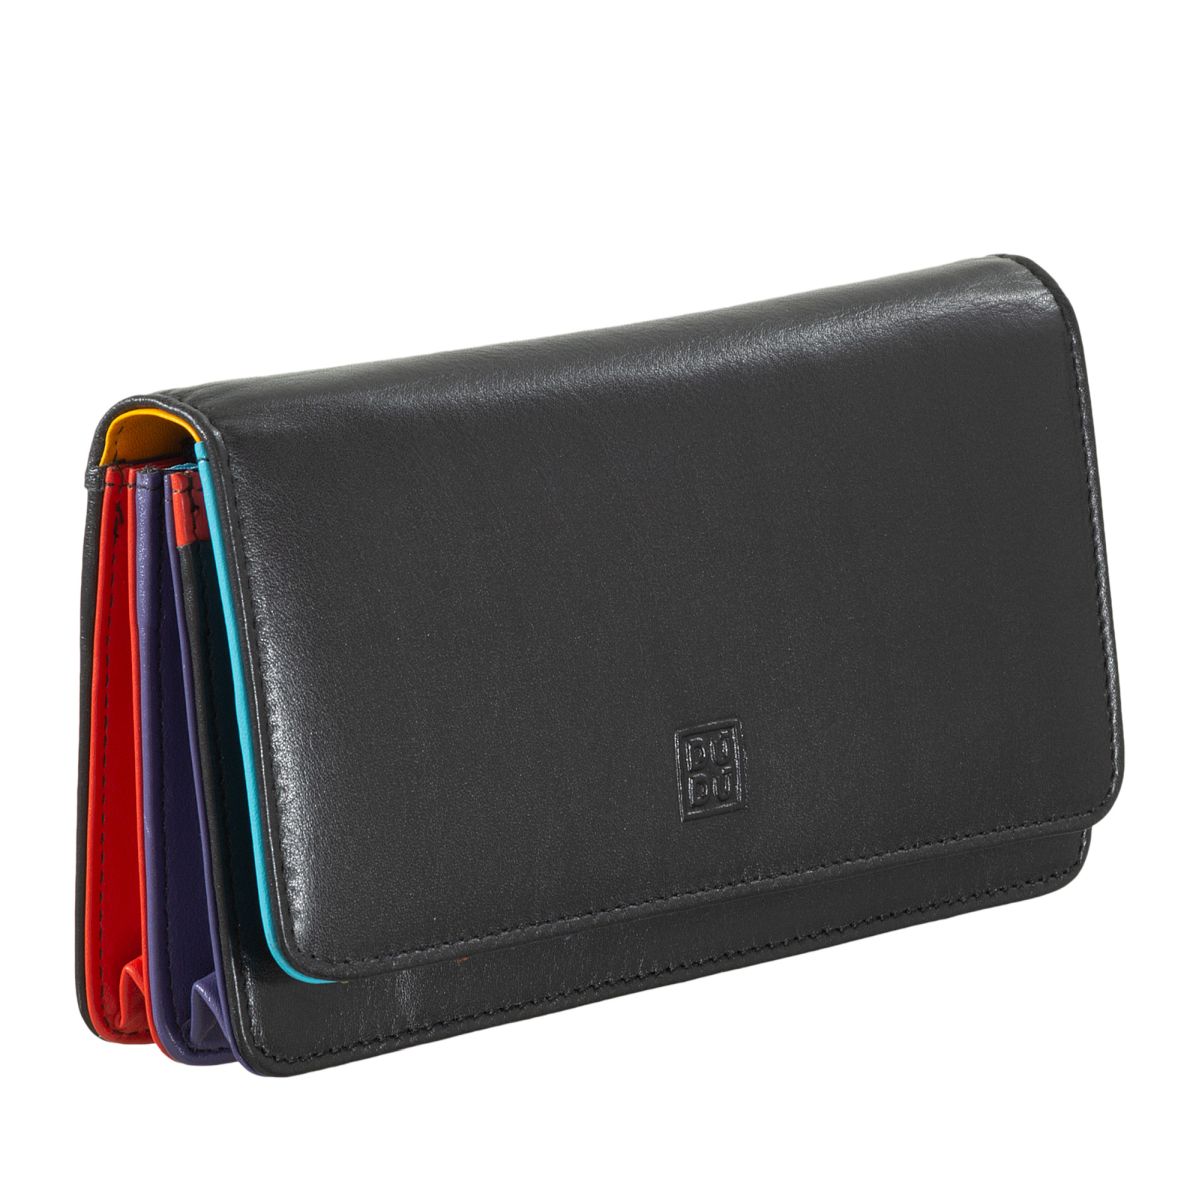 DuDu Ladies leather multi color wallet - Black